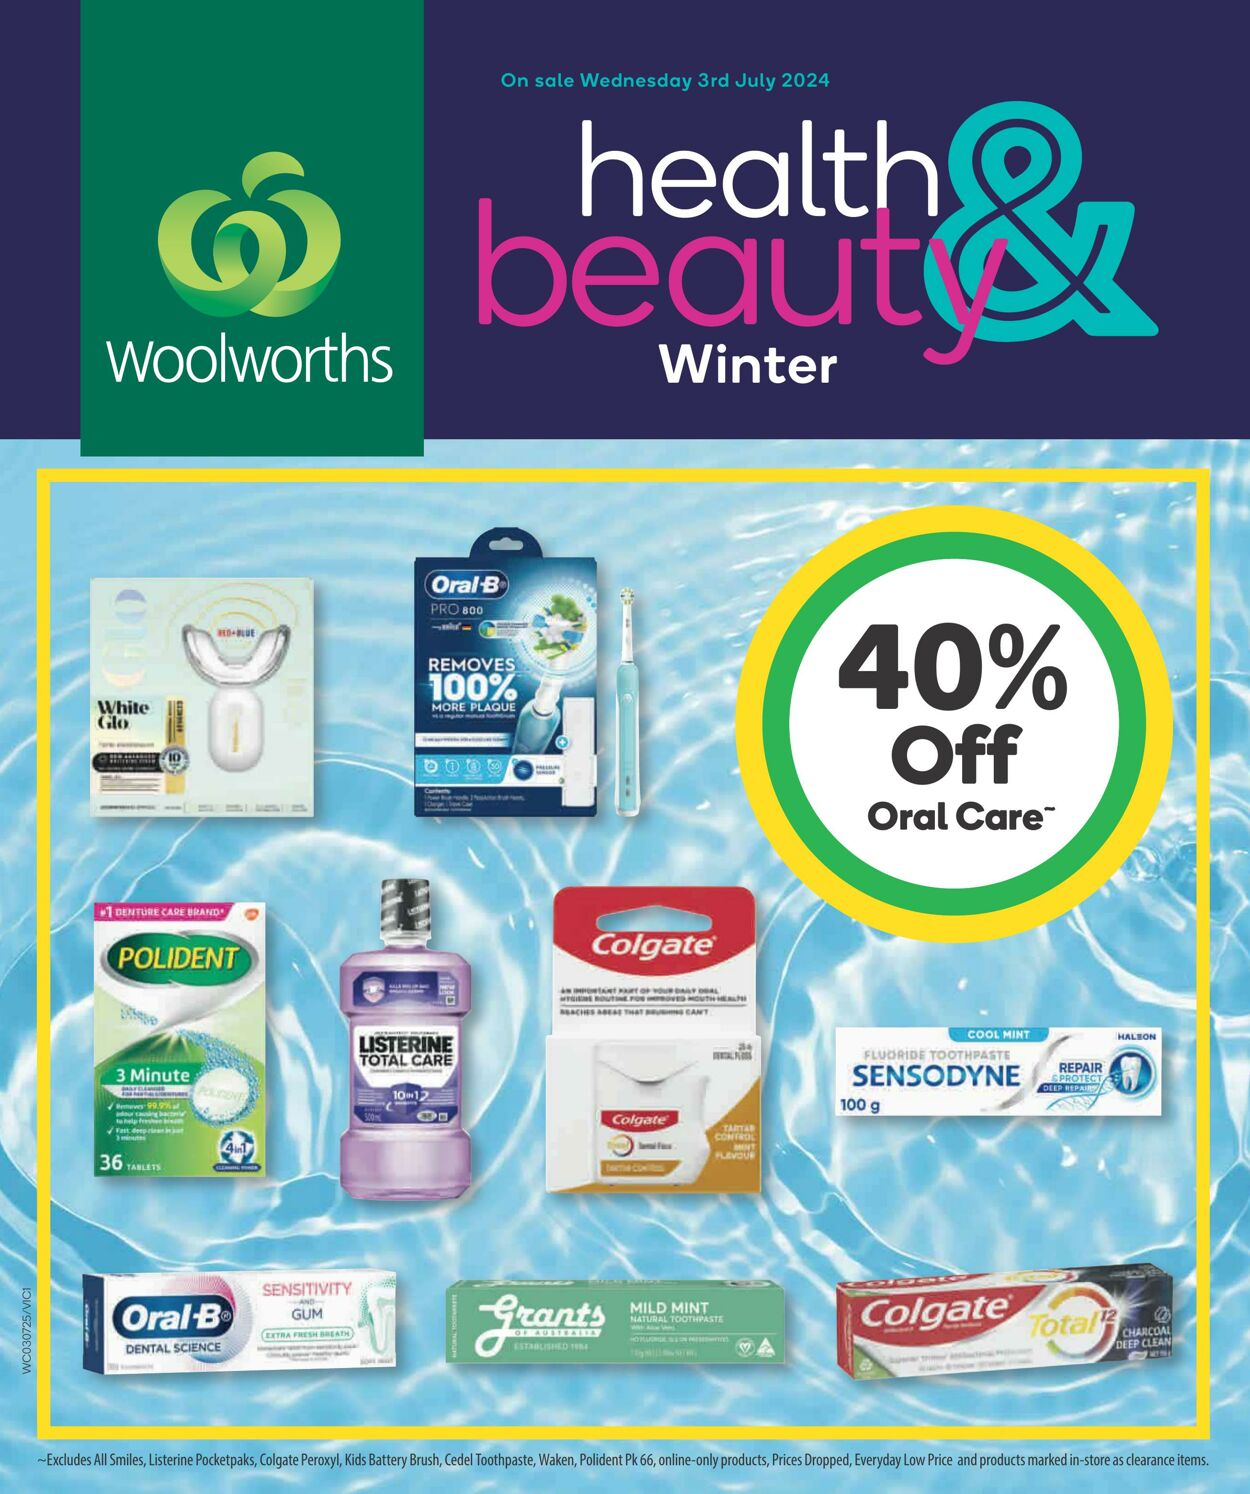 Catalogue Woolworths - Winter Health & Beauty Catalogue VIC 3 Jul, 2024 - 9 Jul, 2024